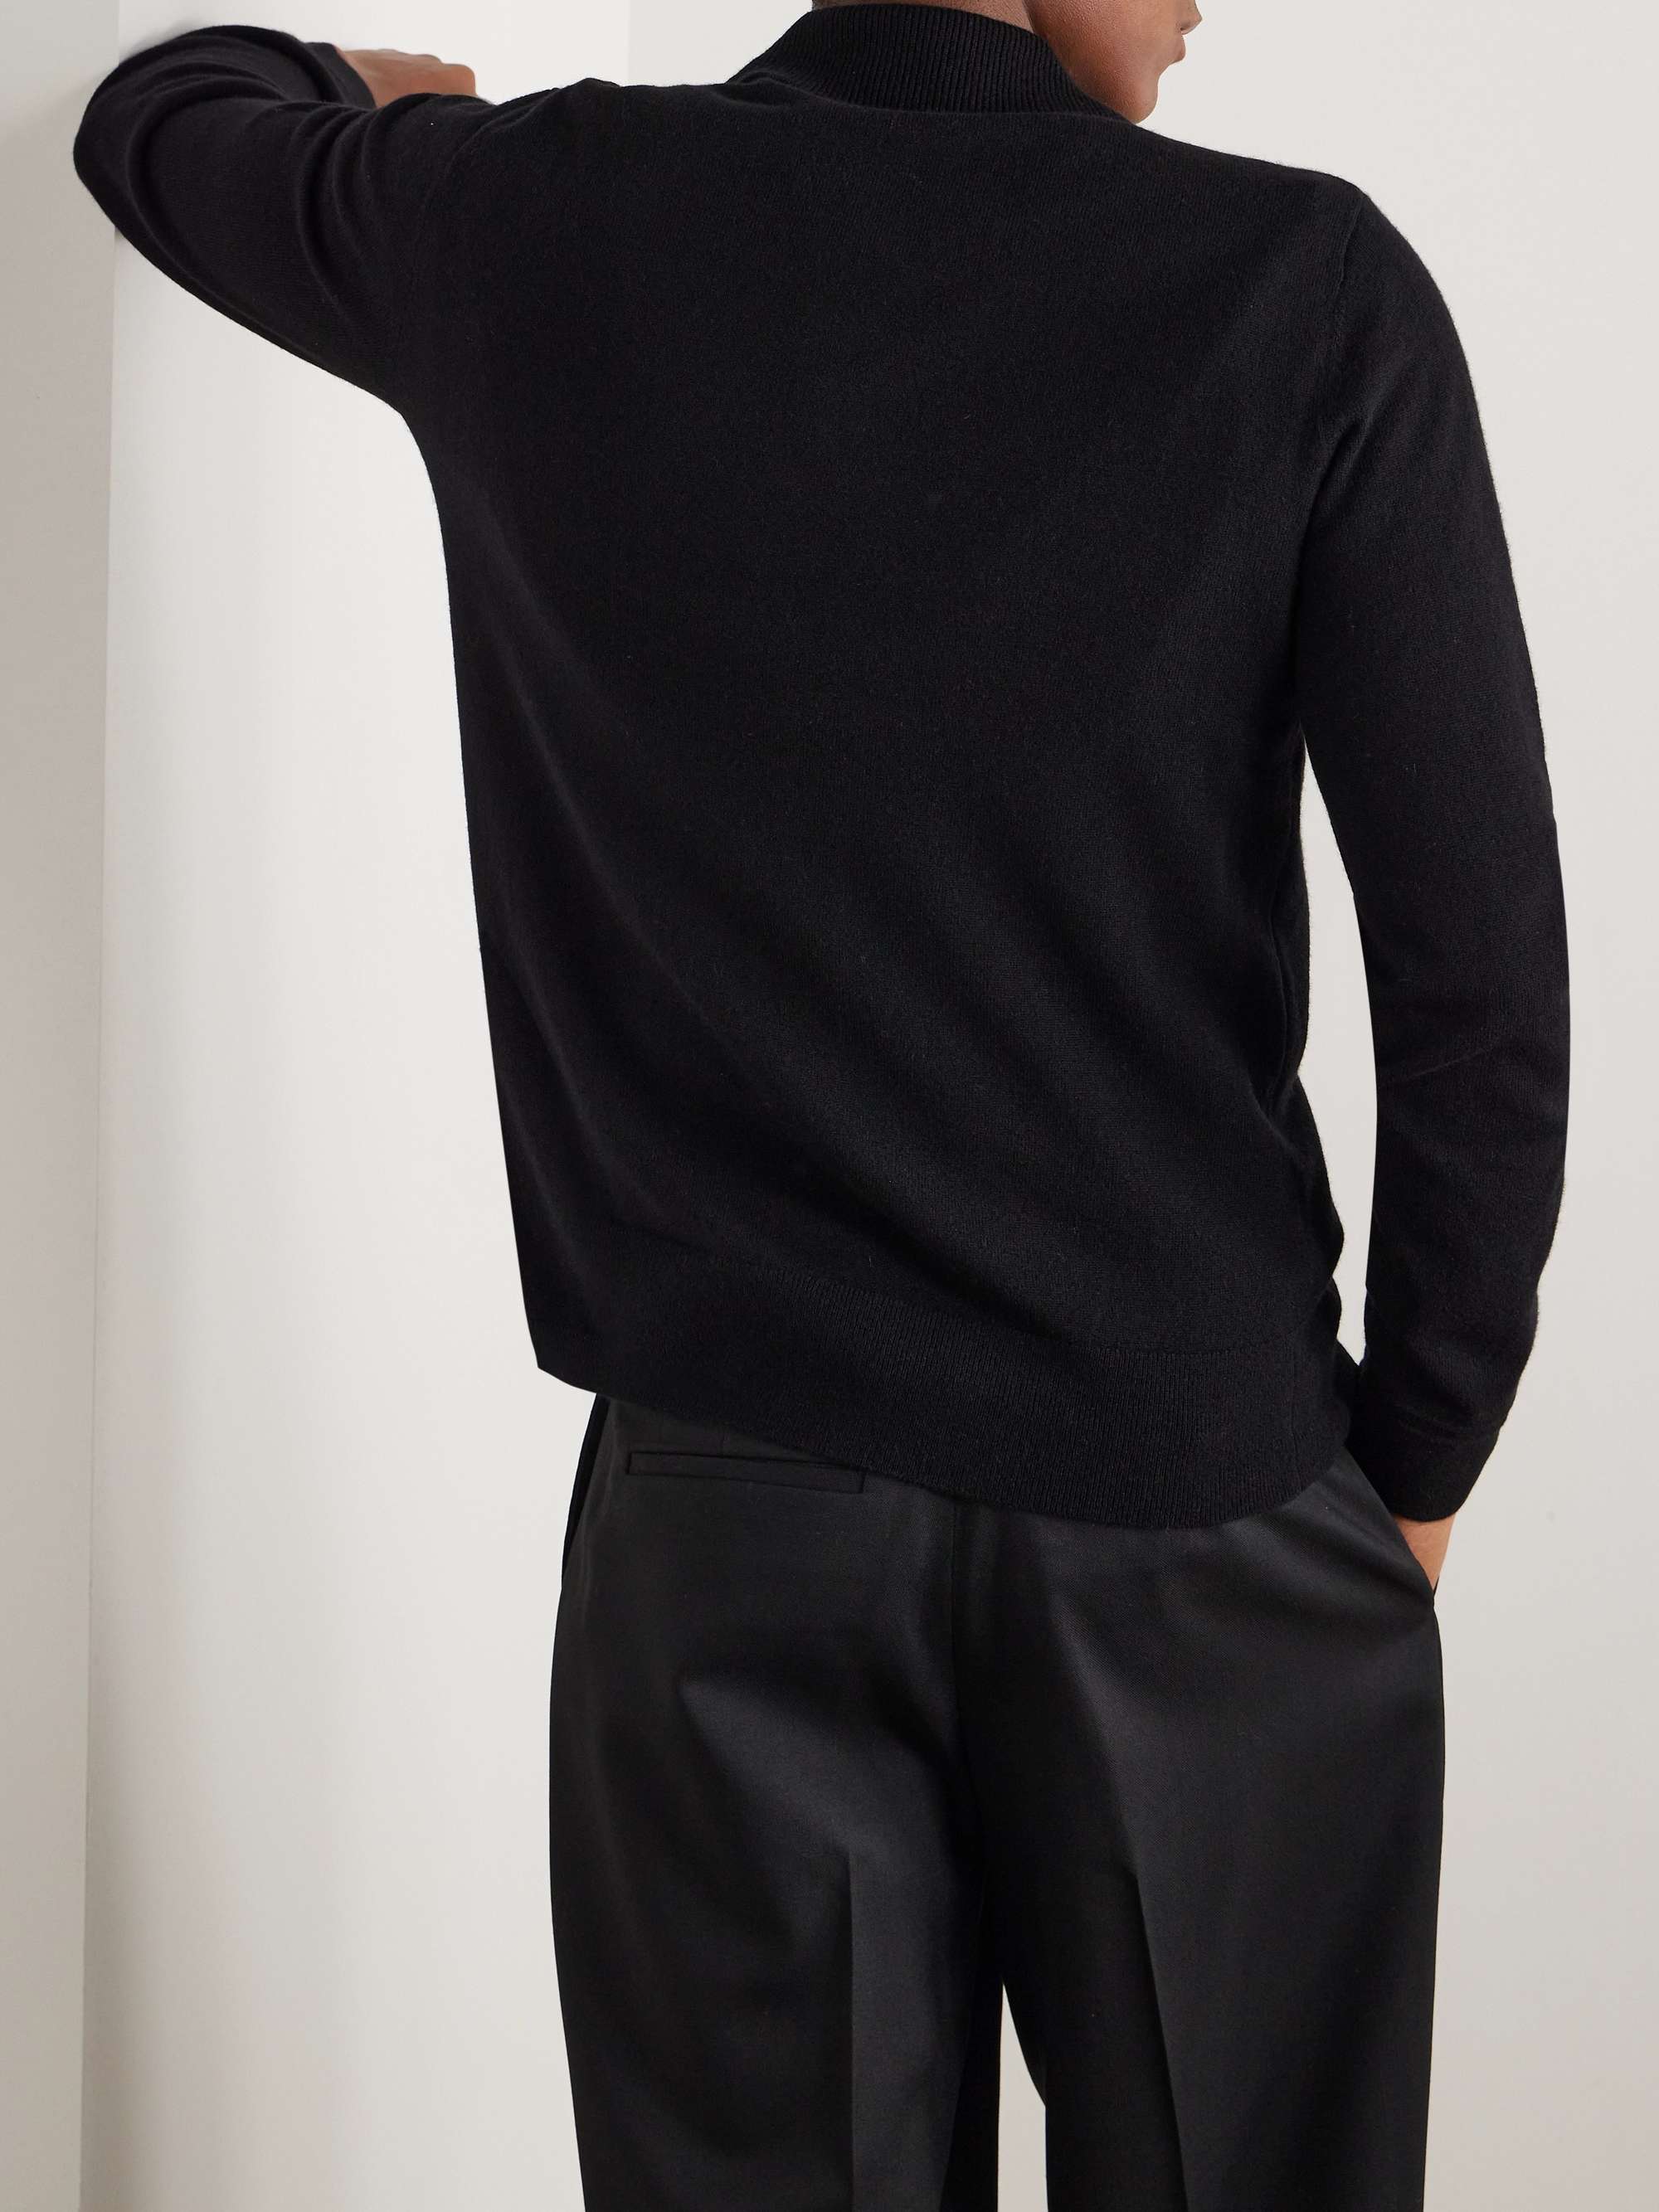 MR P. Cashmere Polo Shirt for Men | MR PORTER